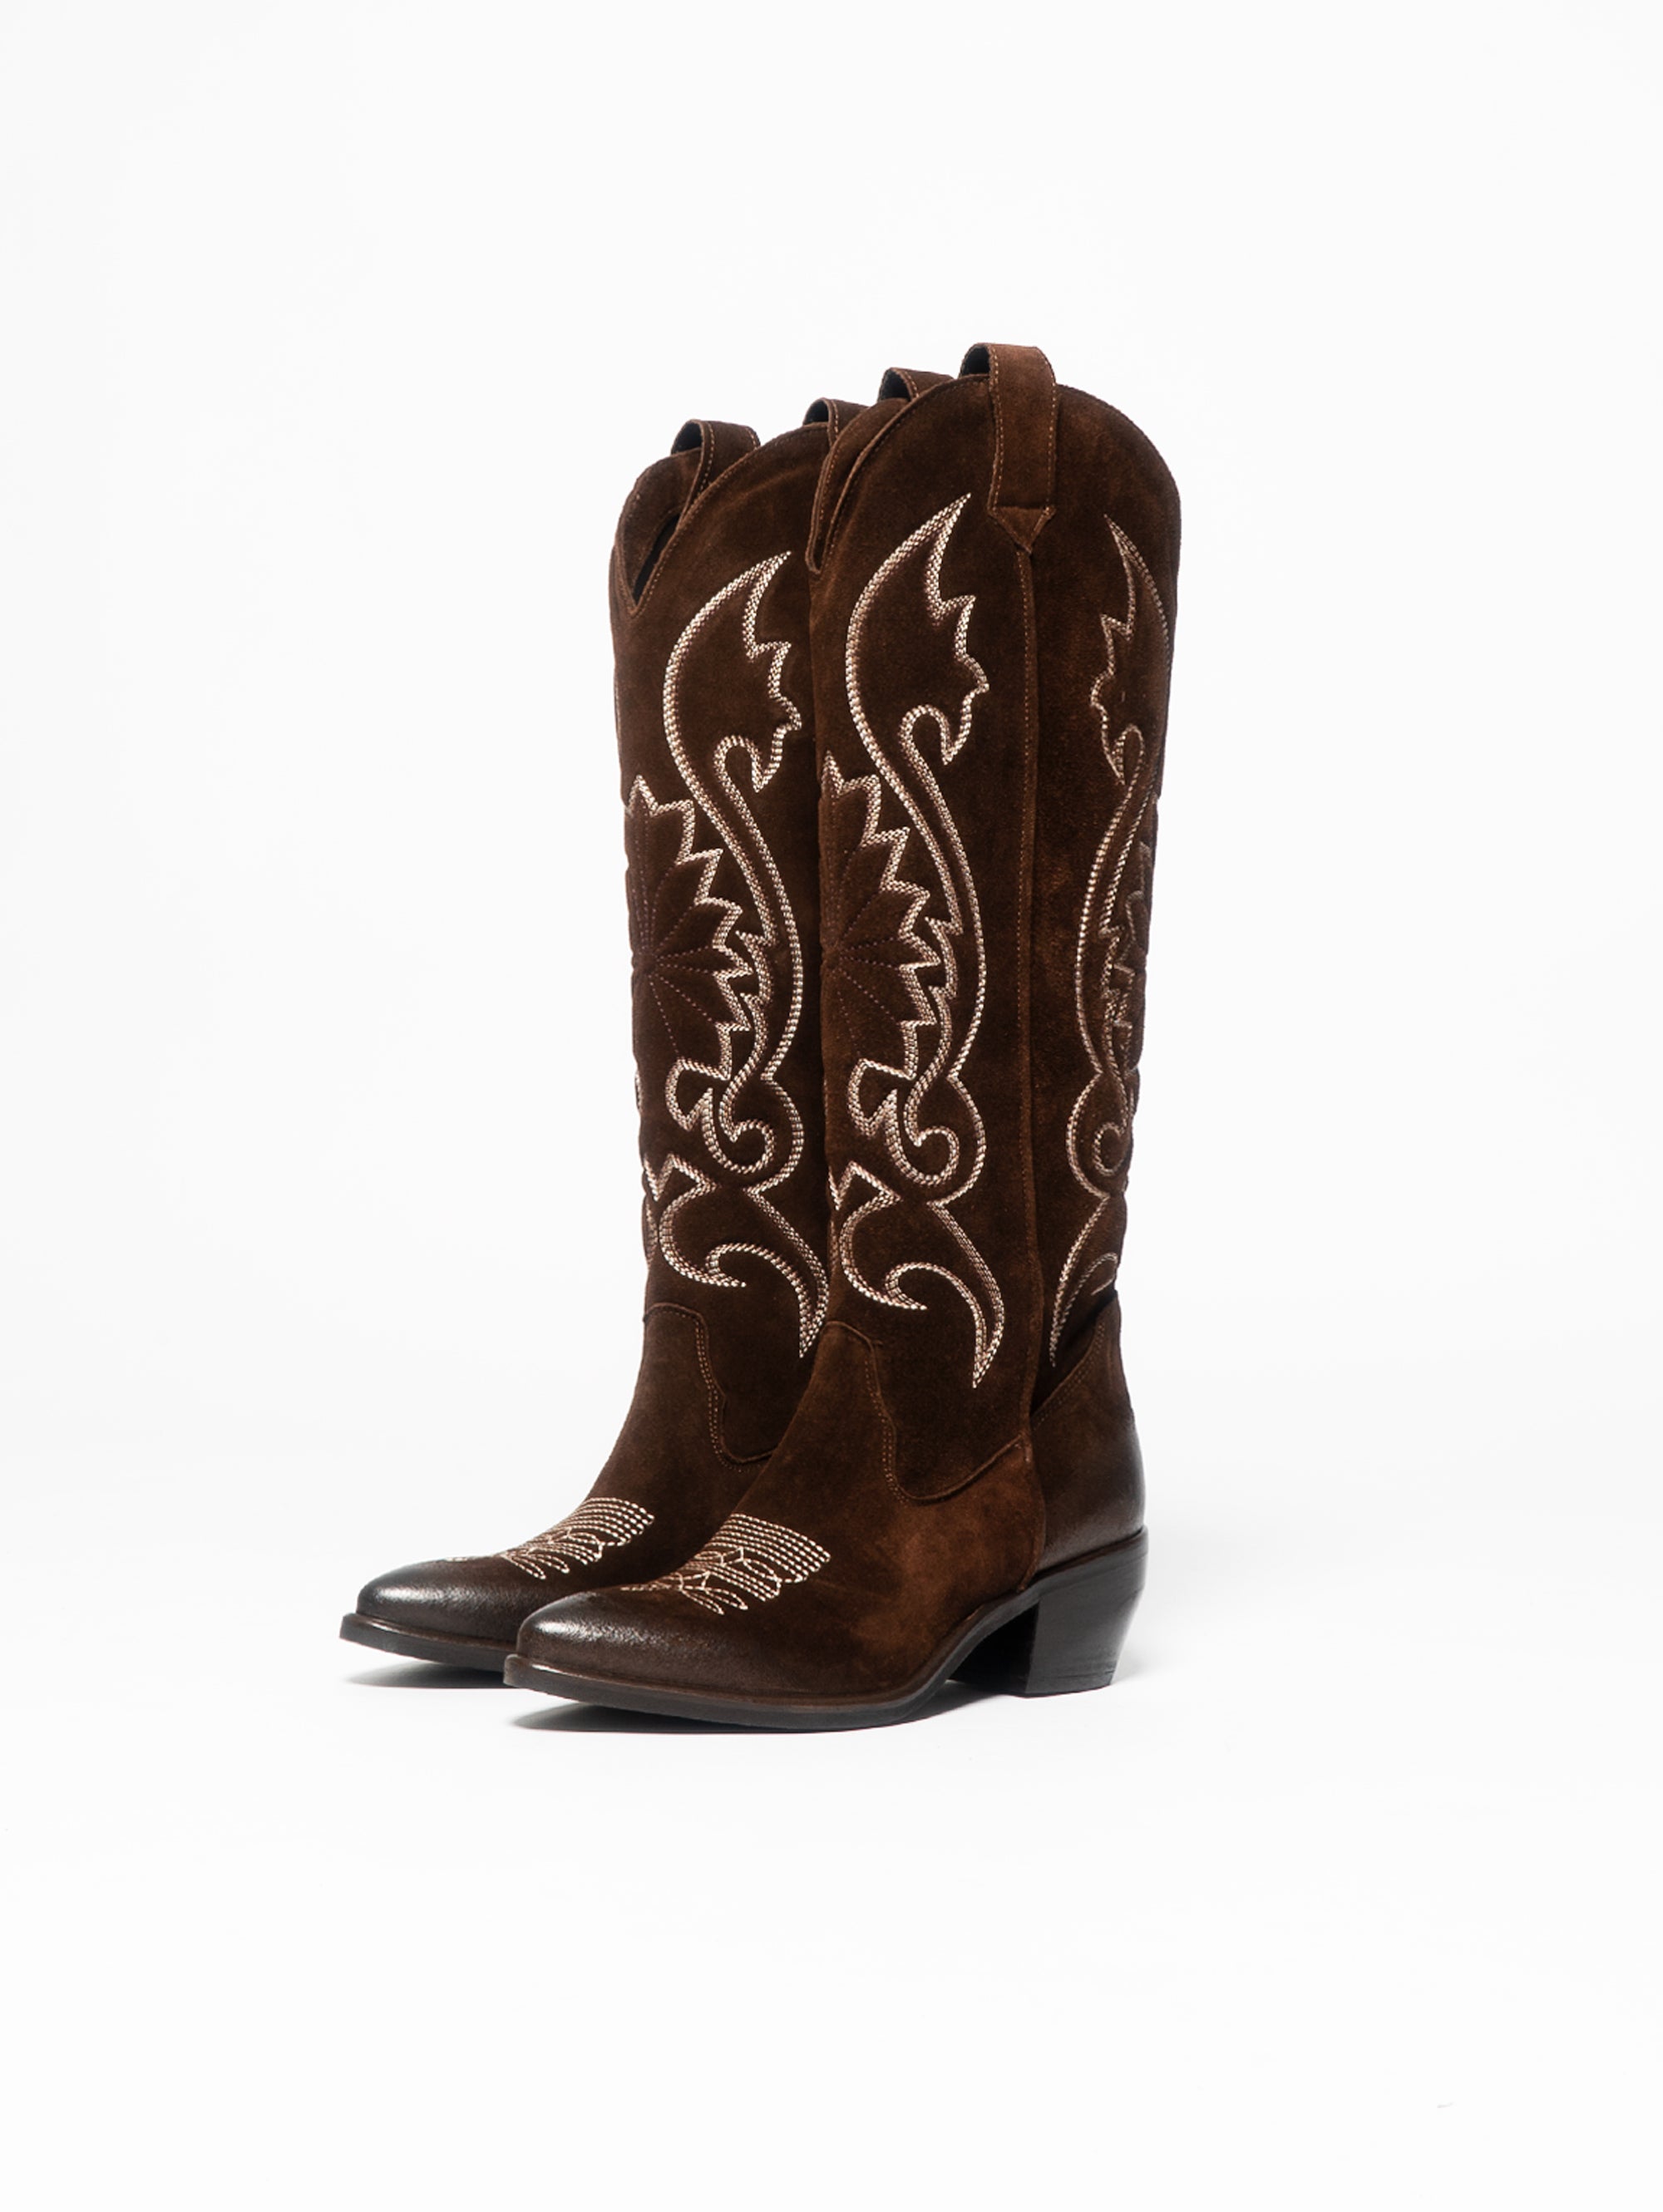 Western style Texan boots in dark brown